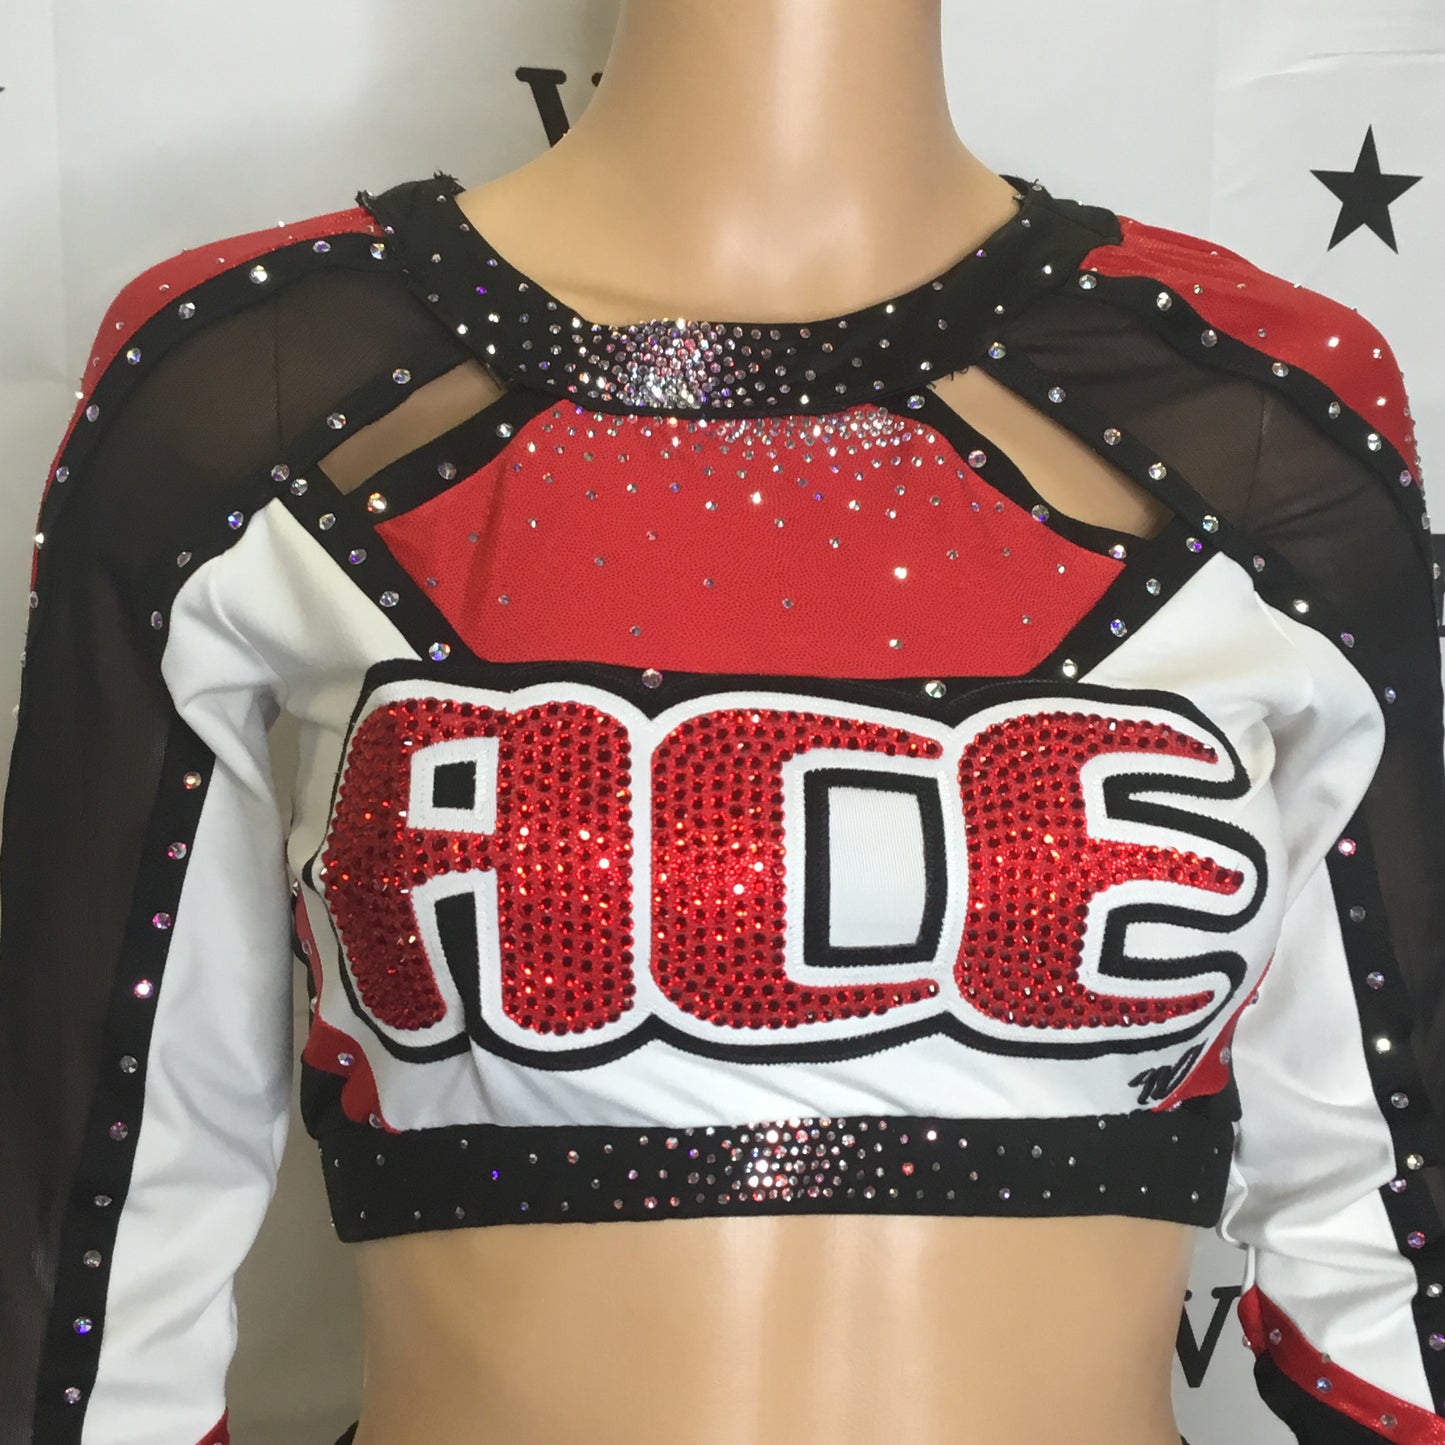 A.C.E Allstar cheerleading uniform